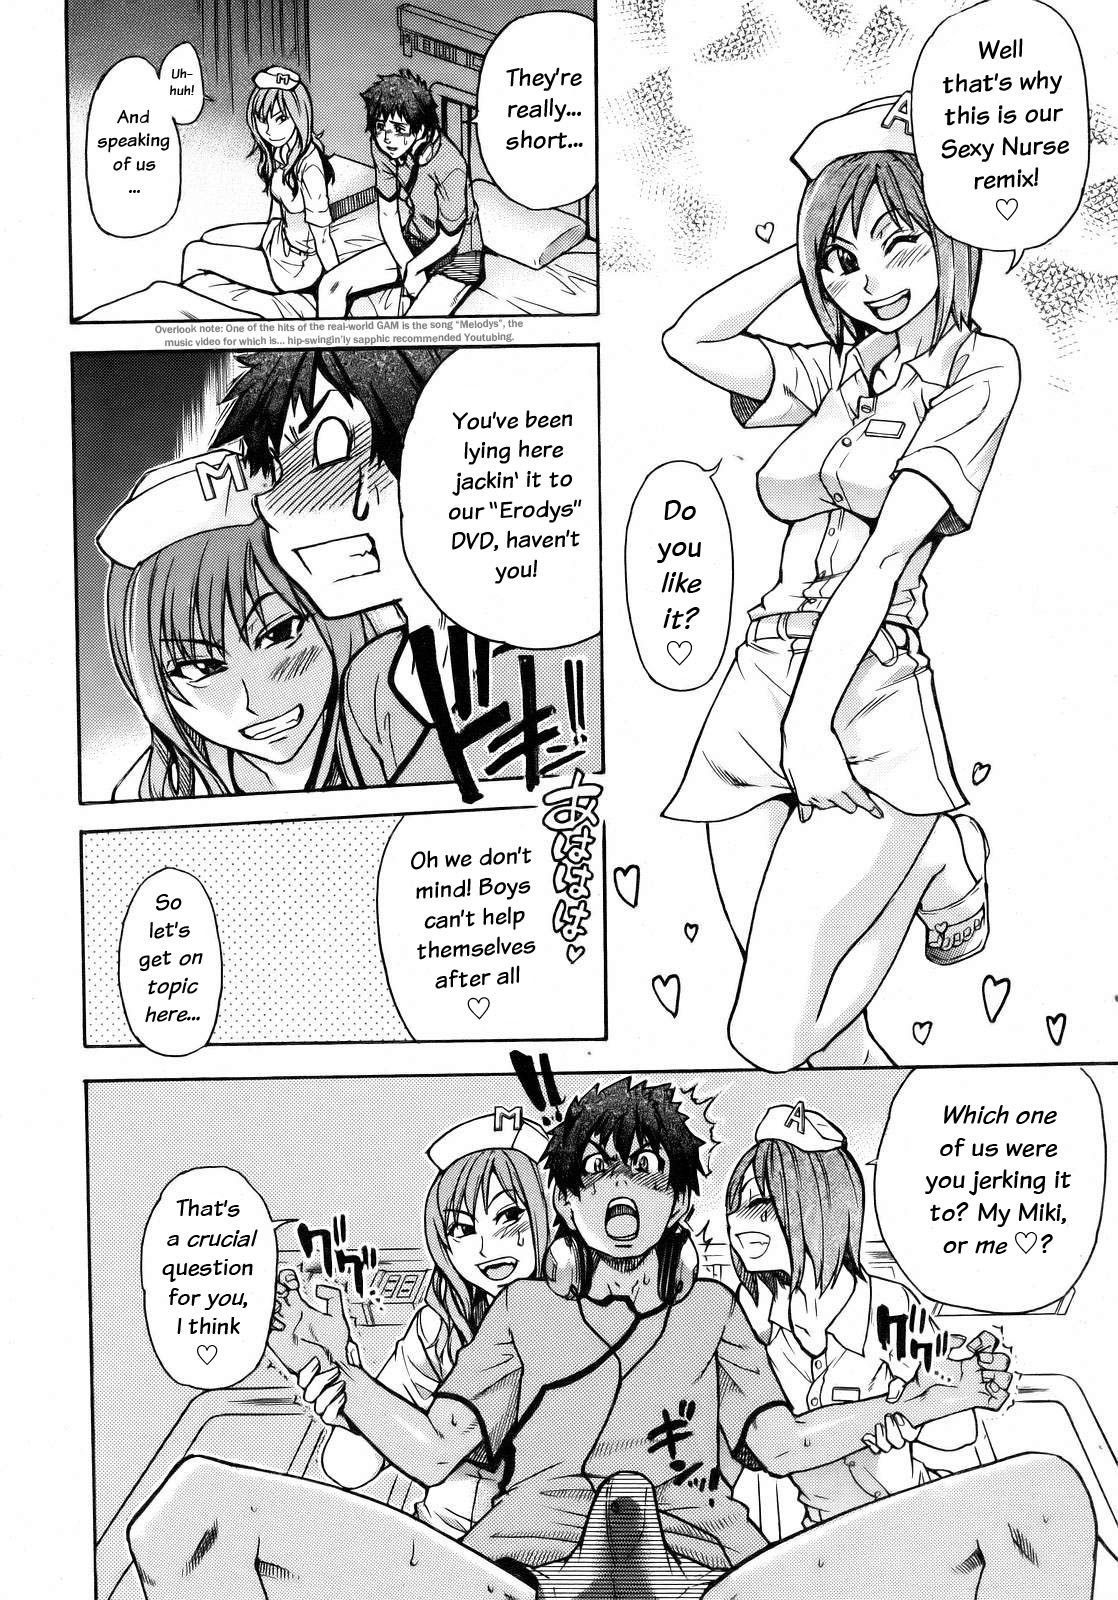 Musume in a House of Vice3 27 hentai manga